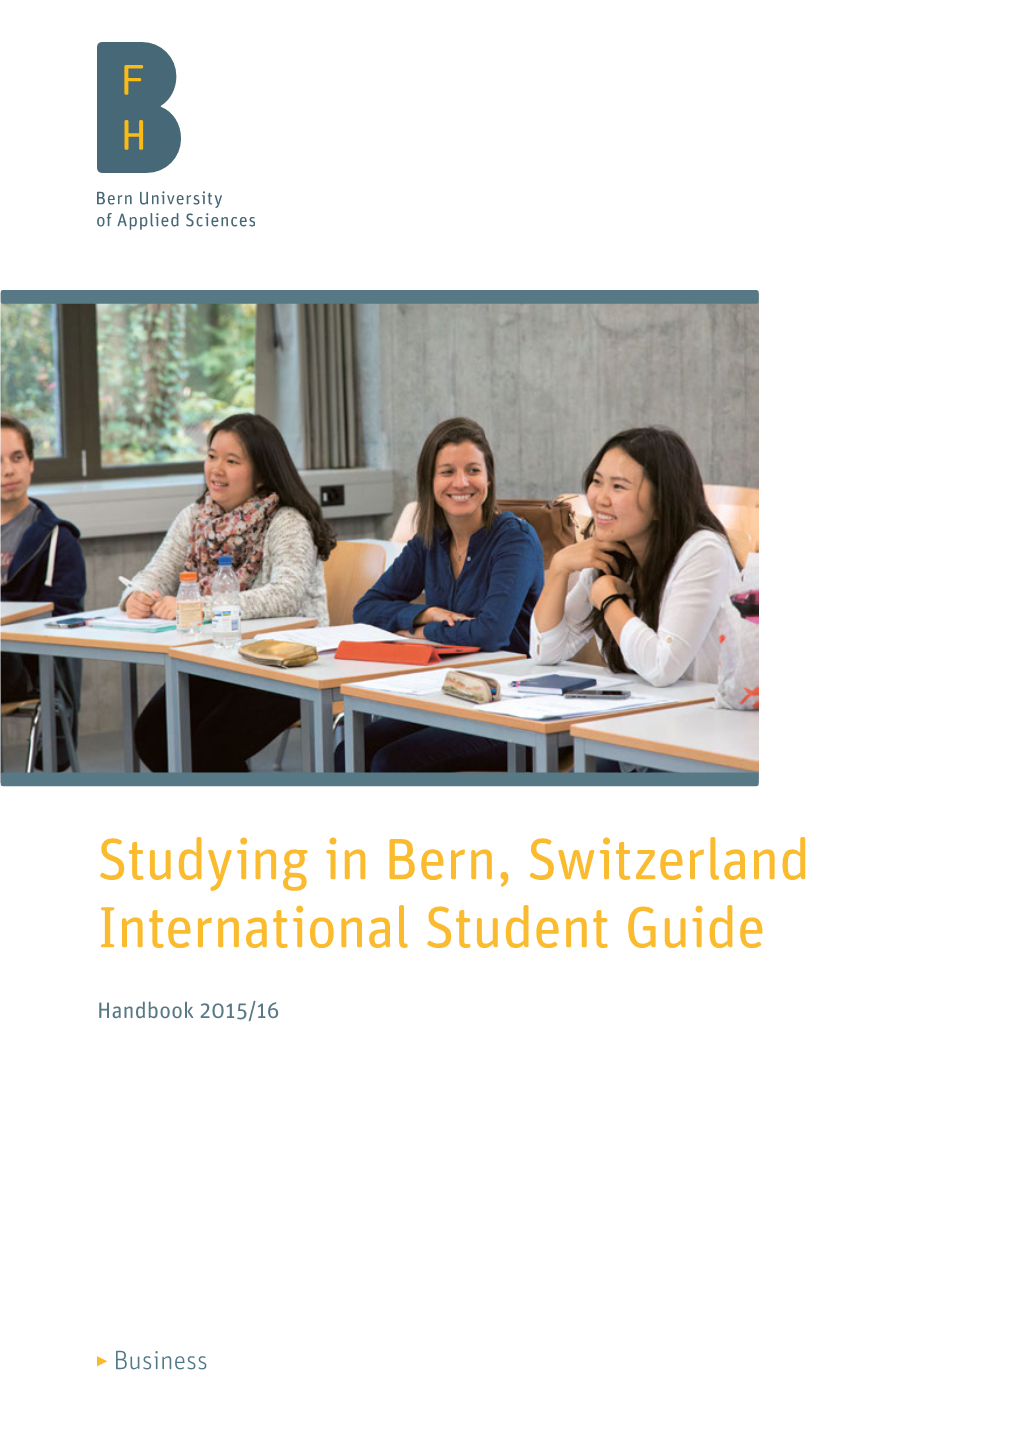 Studying in Bern, Switzerland International Student Guide